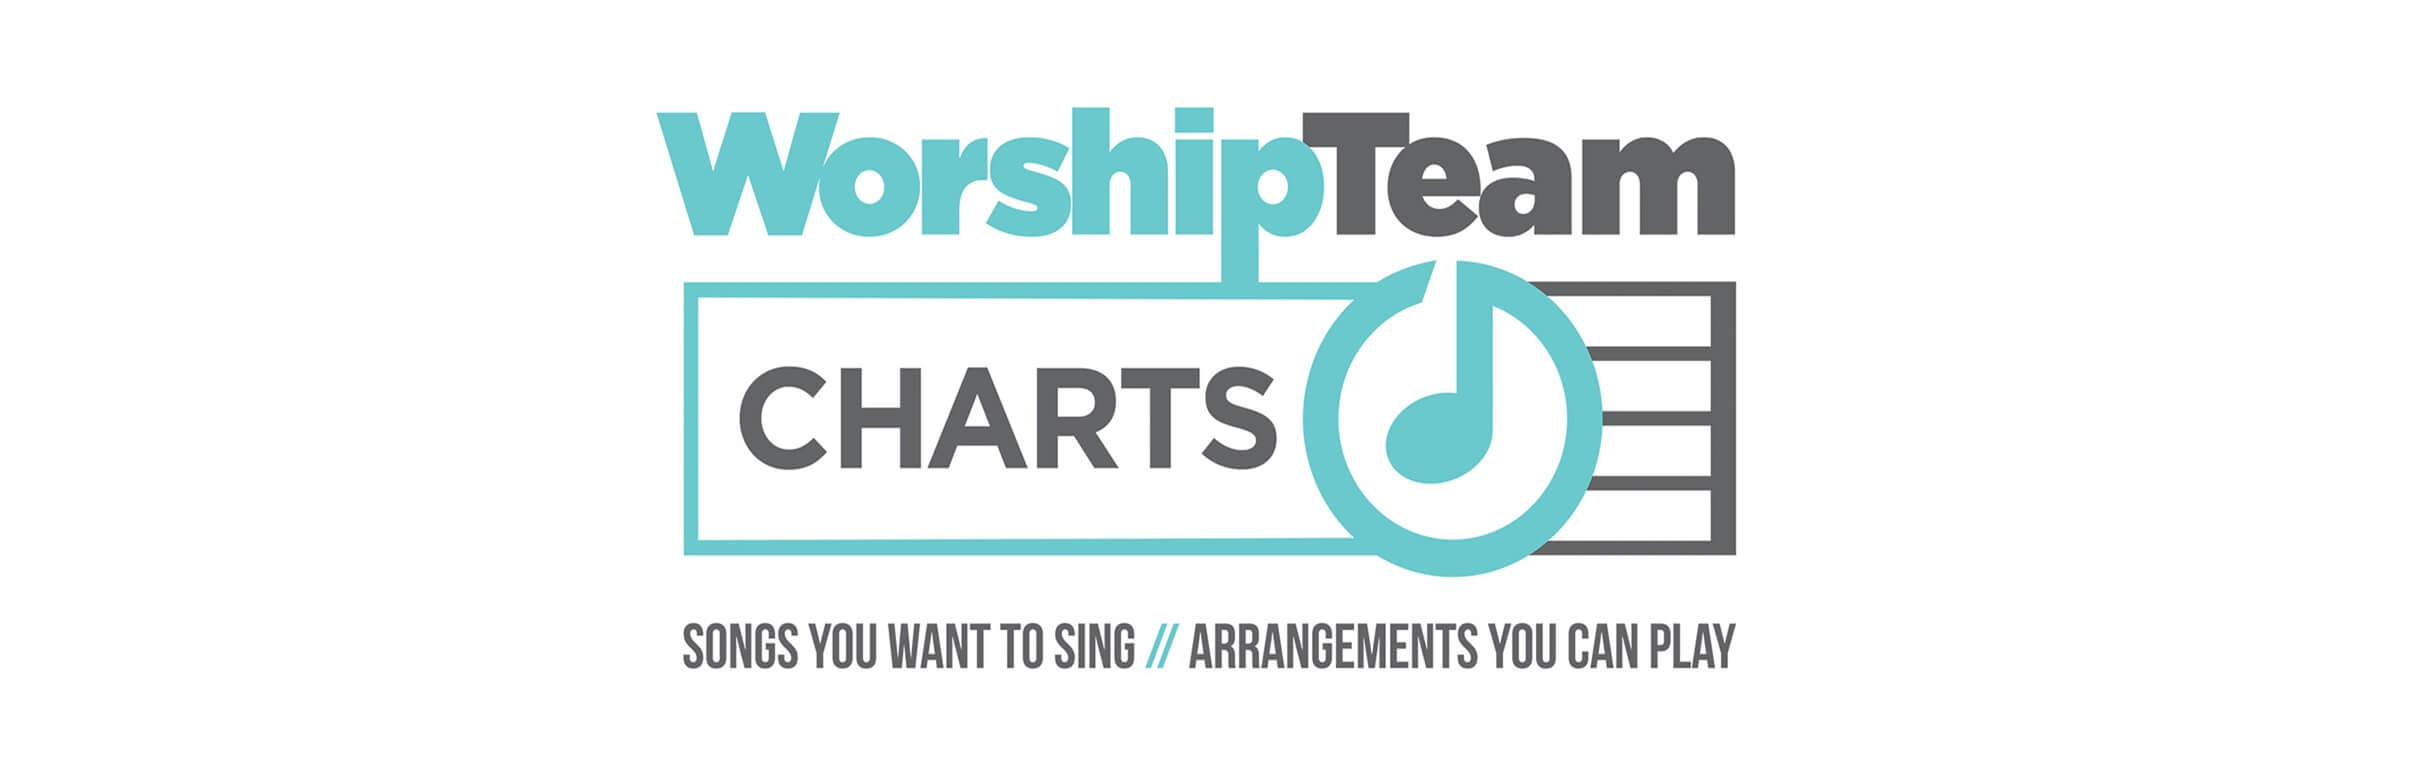 WorshipTeam Charts